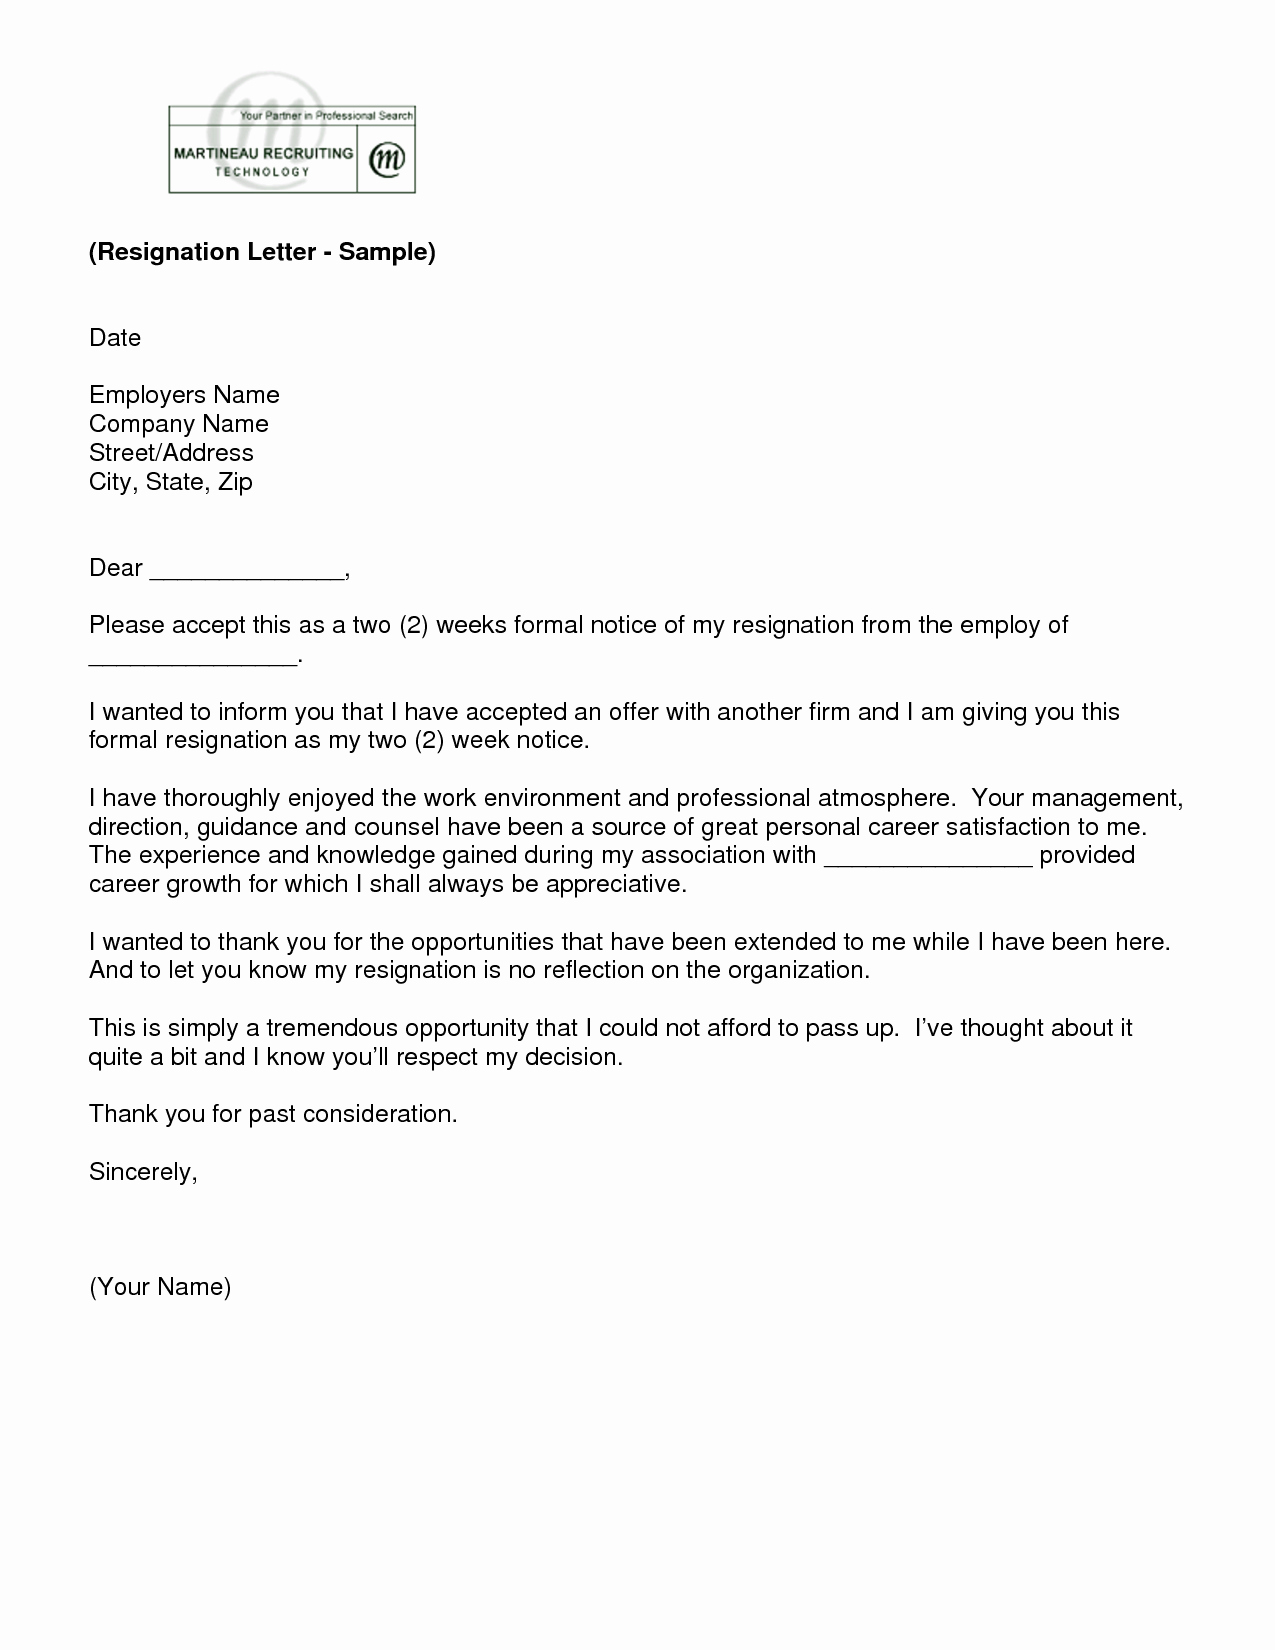 Letter Of Resignation Email Template Lovely Letter Of Resignation 2 Weeks Notice Template